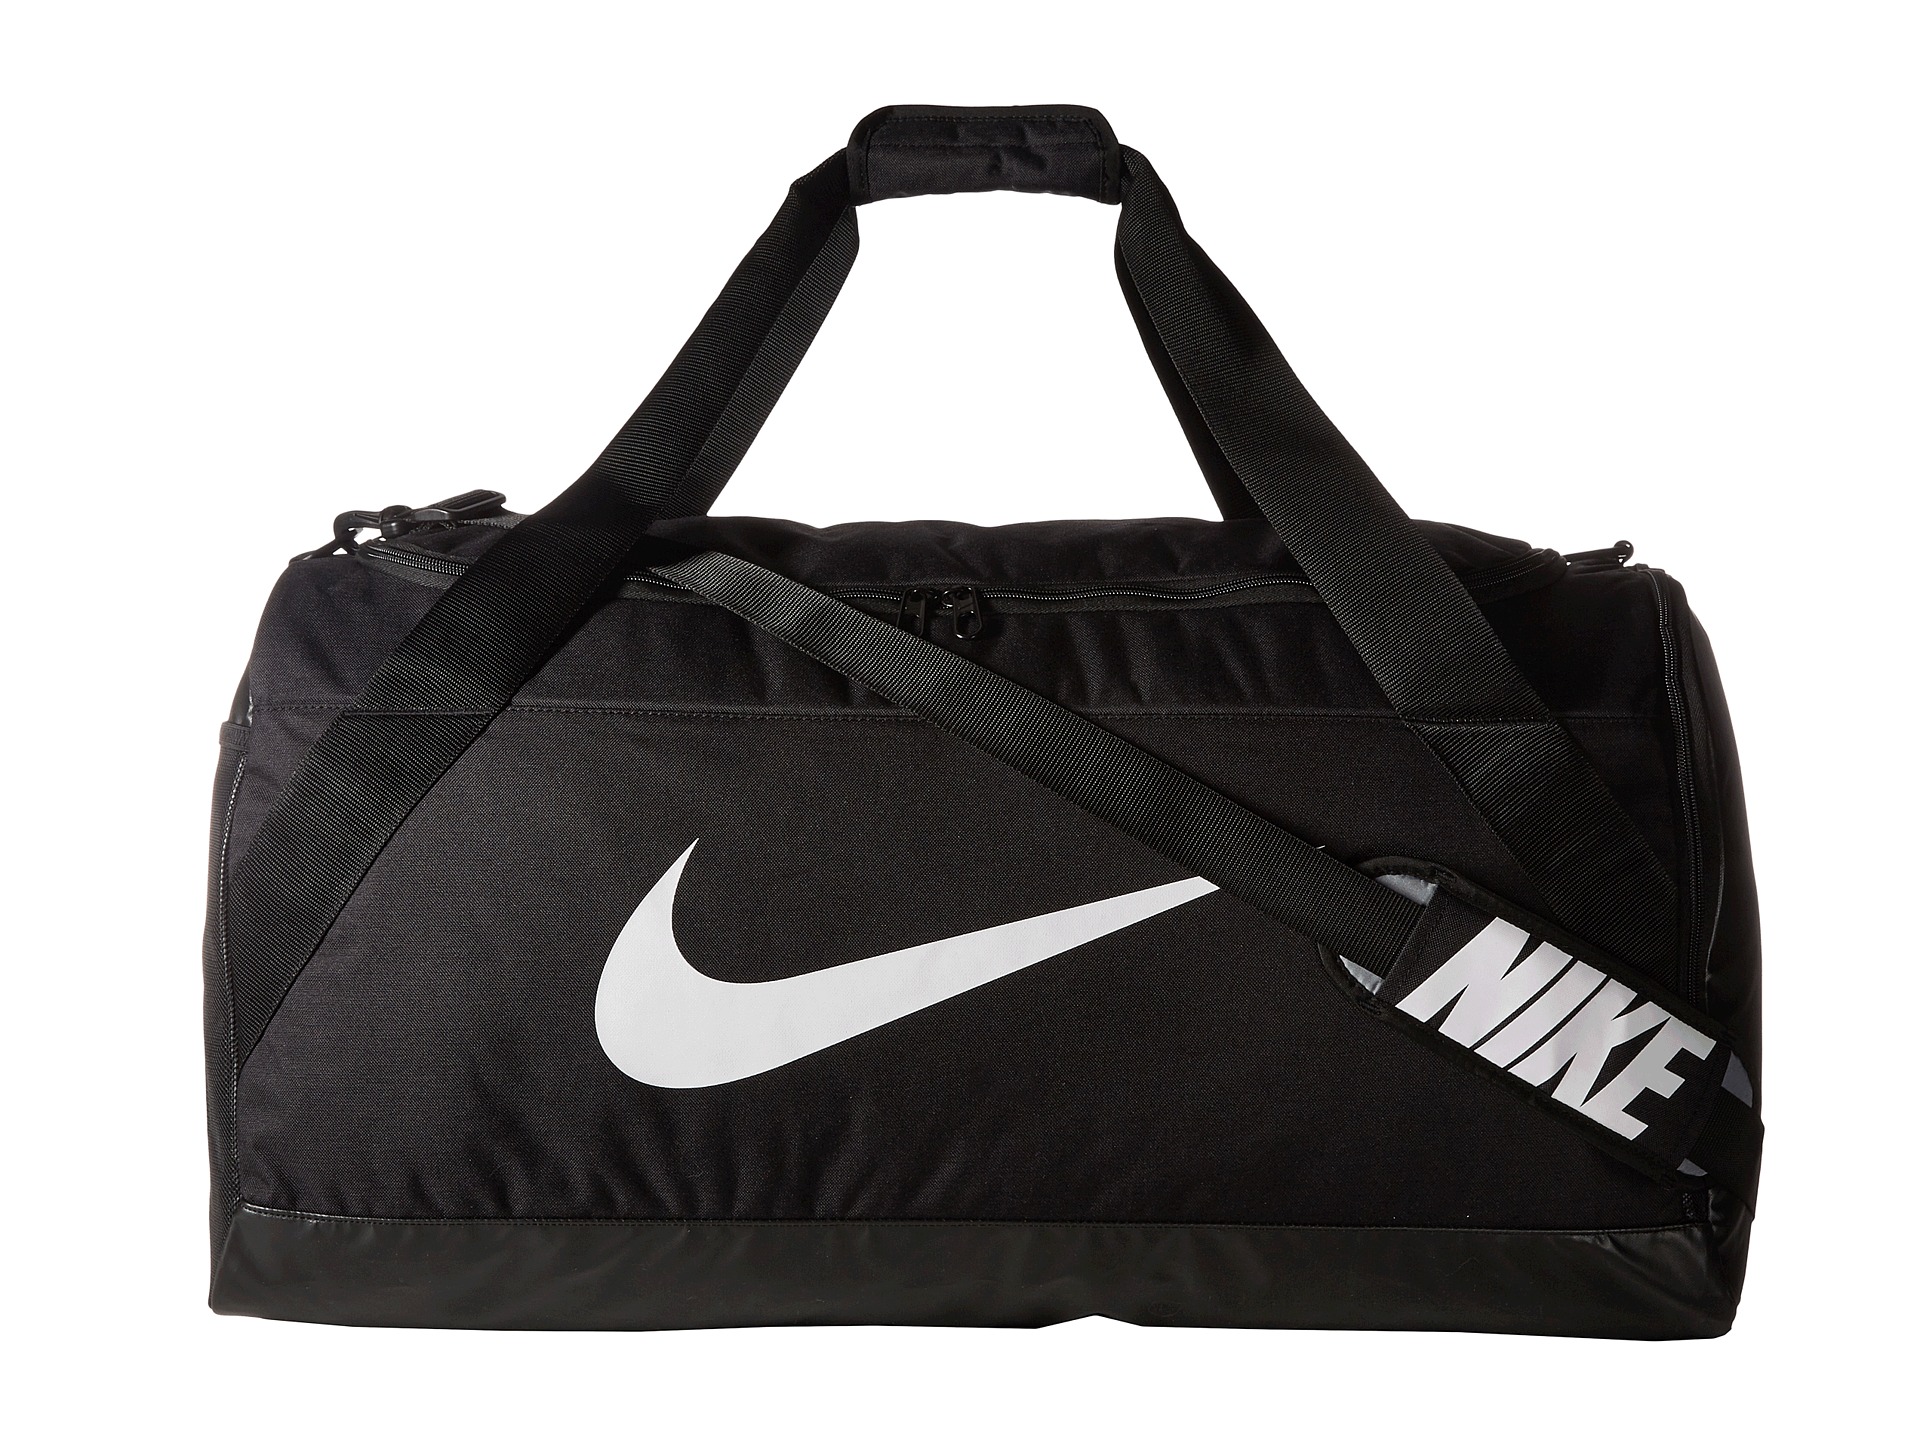 Nike Brasilia Extra Large Duffel Bag - comicsahoy.com Free Shipping BOTH Ways